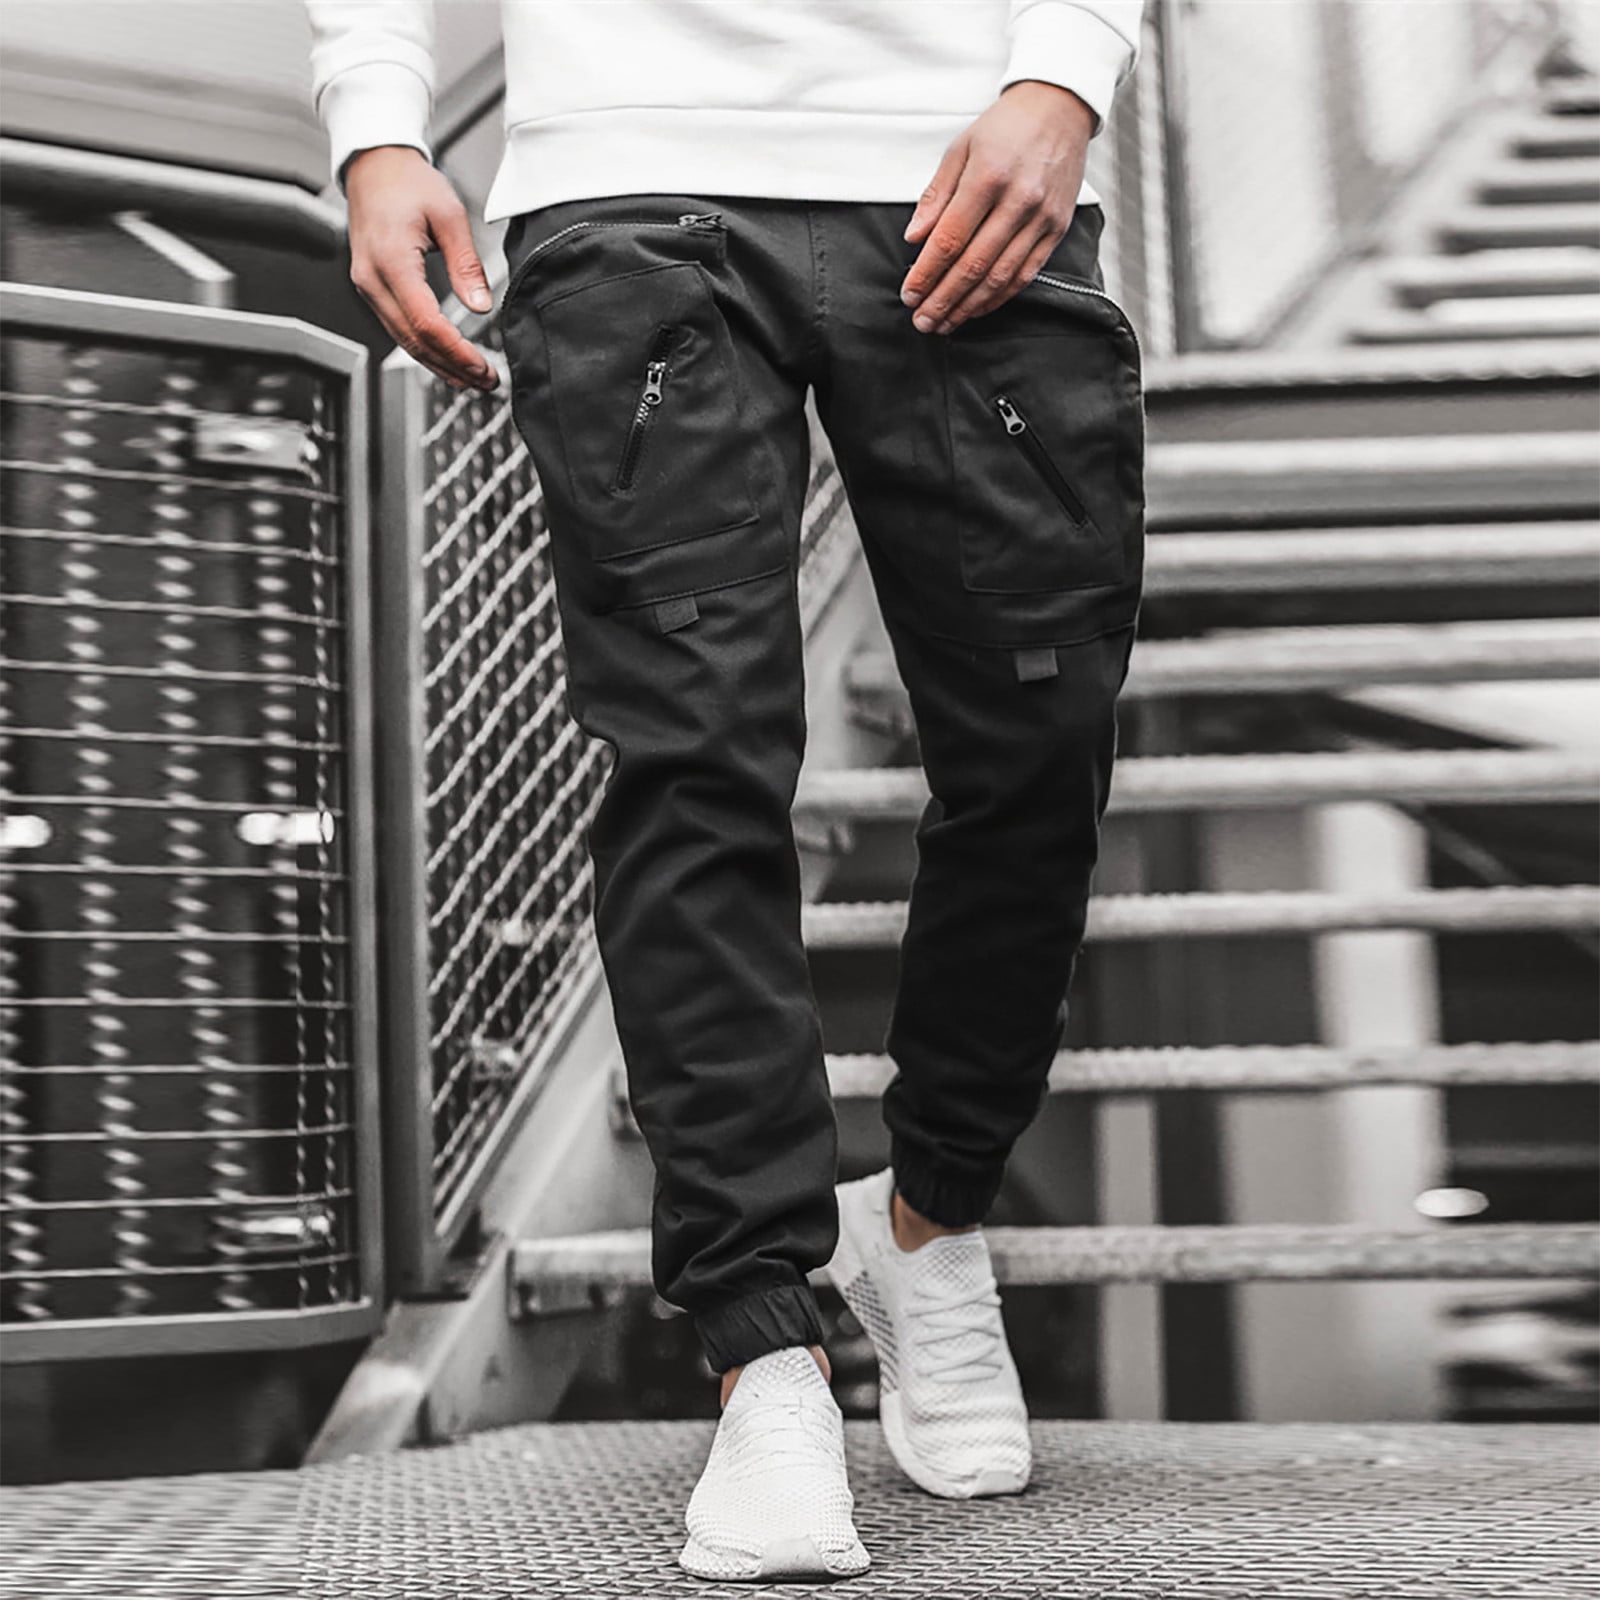 Distressed Black Joggers - Trendy Sweatpants - Drawstring Joggers